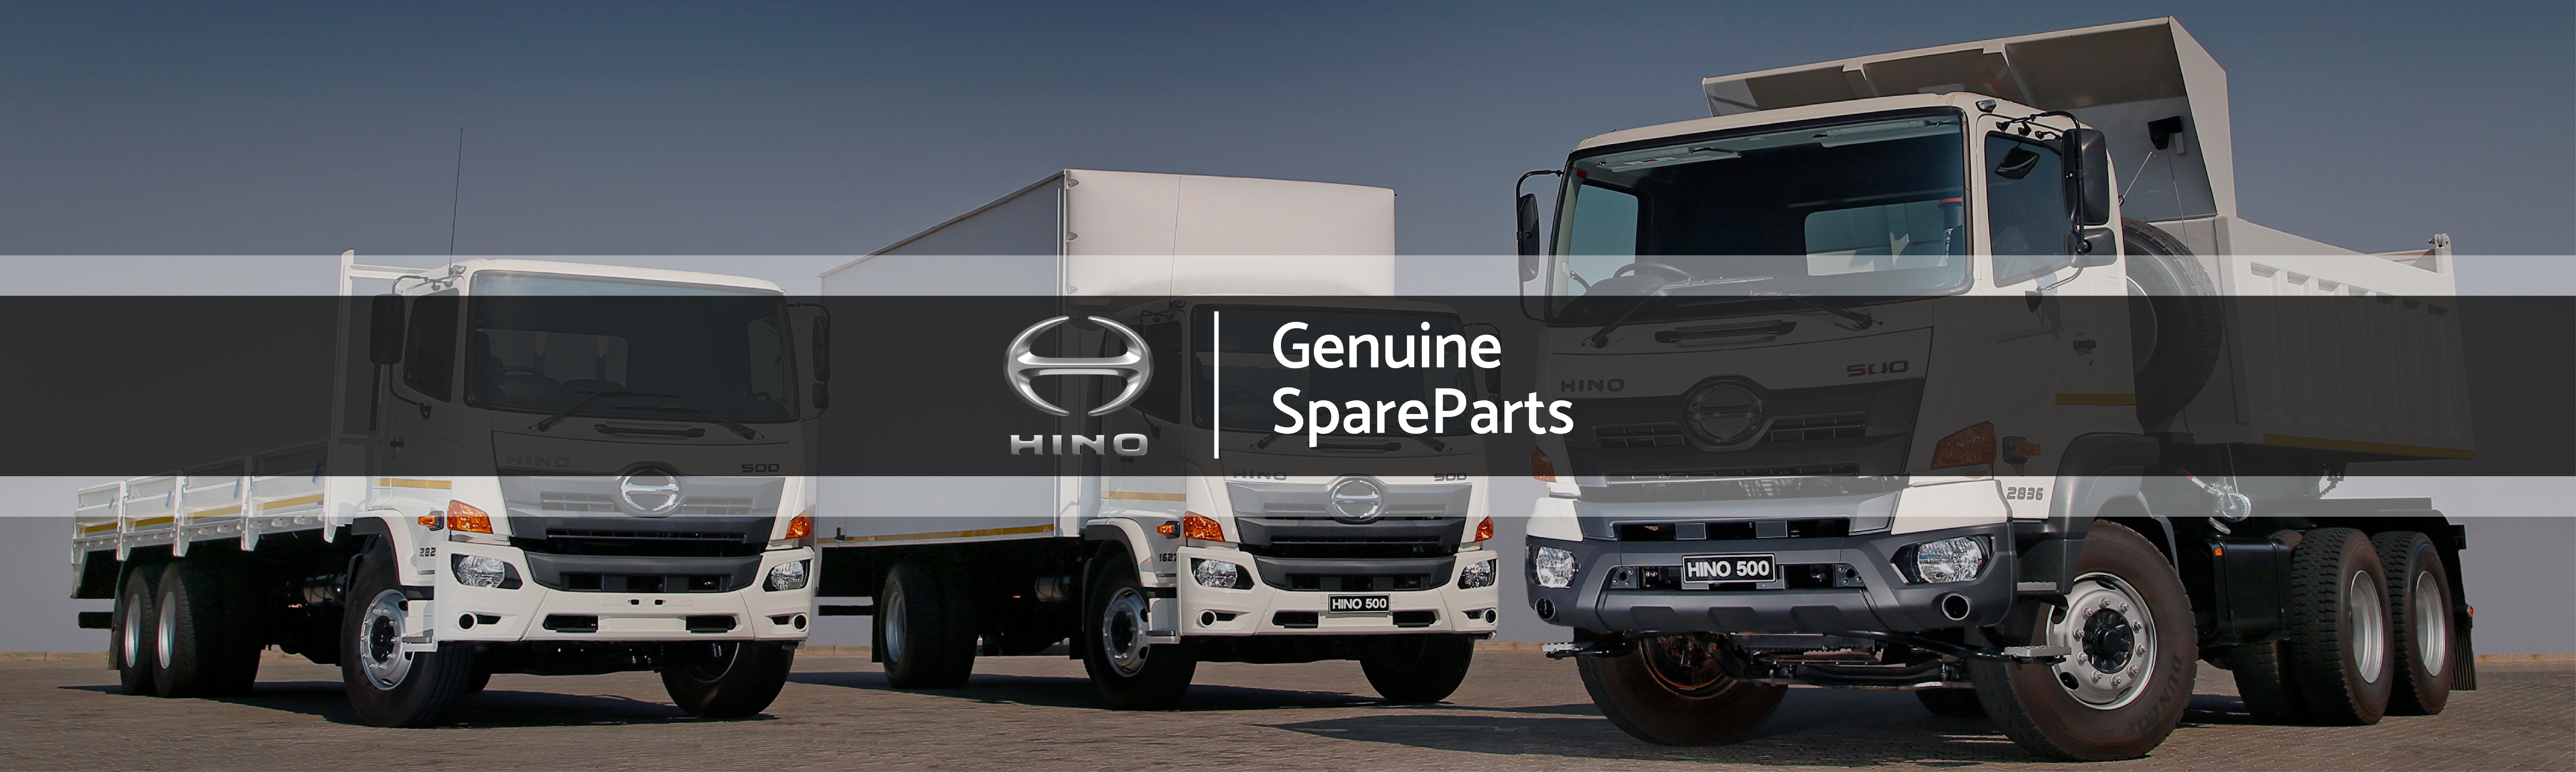 Genuine Hino Spare Parts Supplier In Dubai - UAE